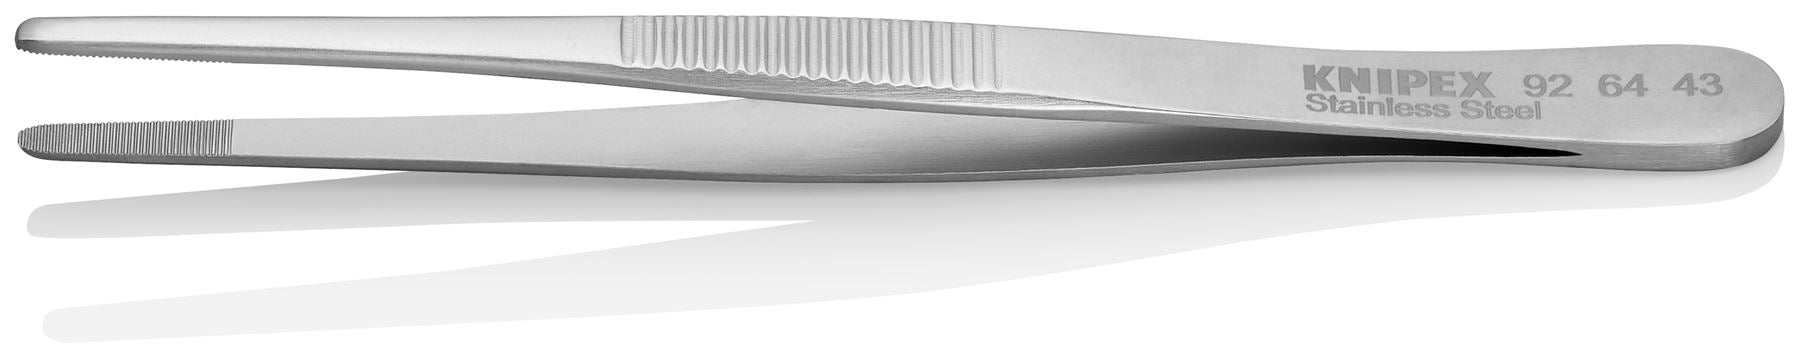 KNIPEX Universal Tweezers 120mm Blunt Tip Stainless Steel 92 64 43